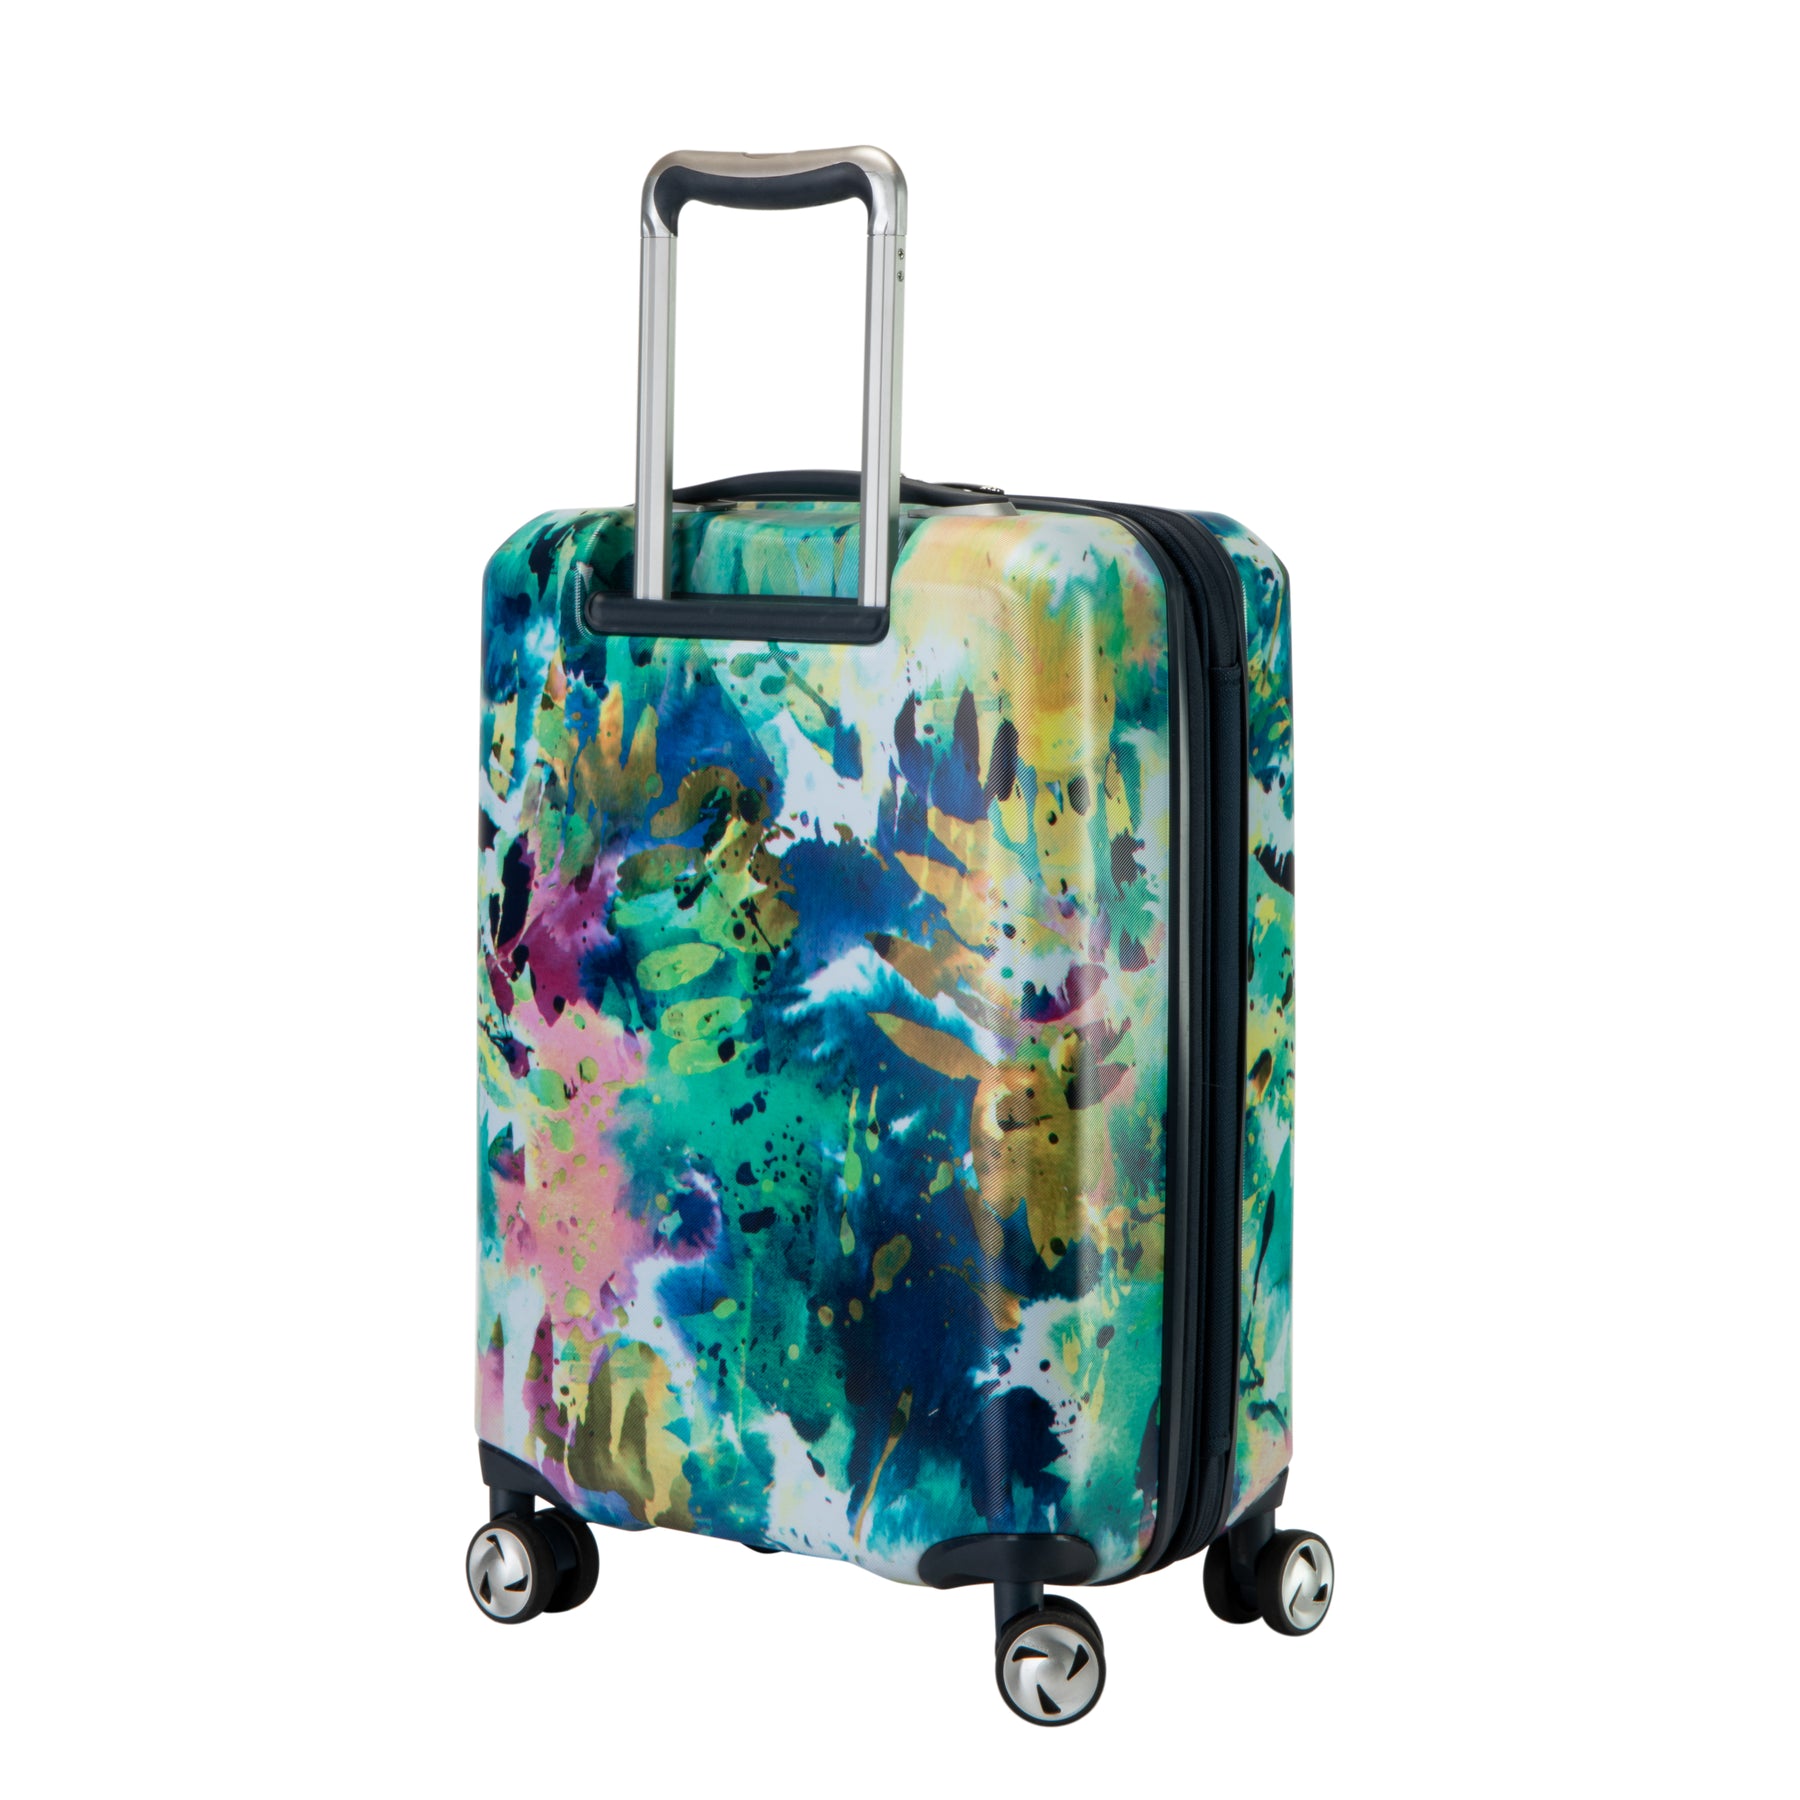 lade som om Specialitet deres Beaumont Hardside Carry-On Suitcase | Ricardo Beverly Hills